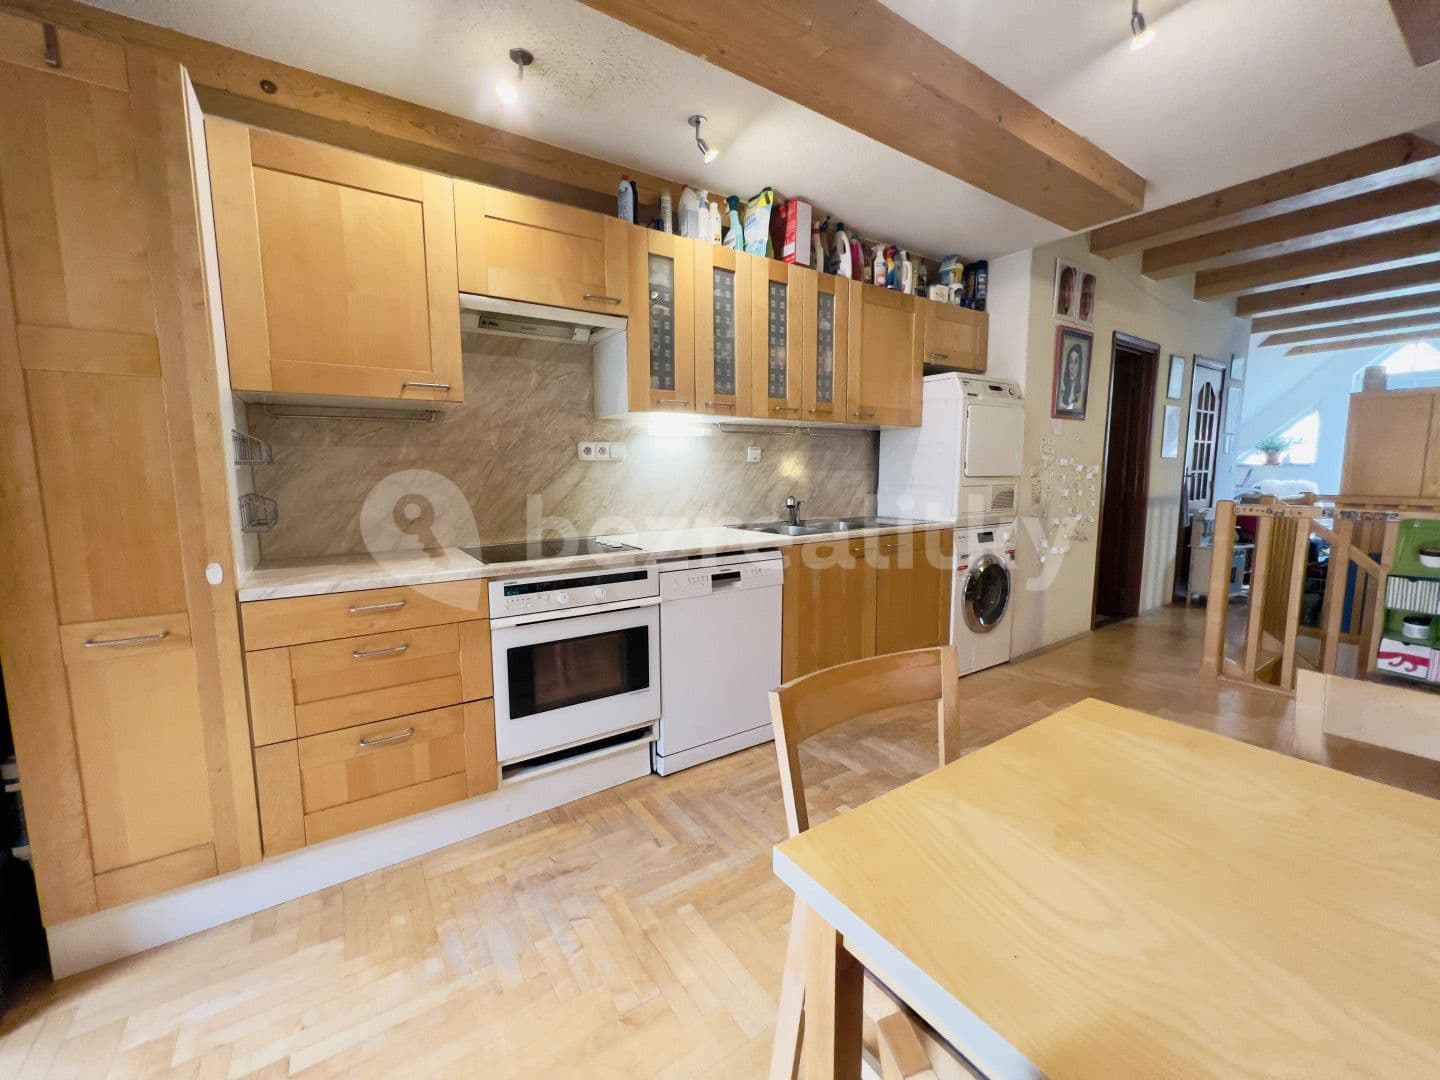 2 bedroom with open-plan kitchen flat for sale, 89 m², Gutova, Prague, Prague